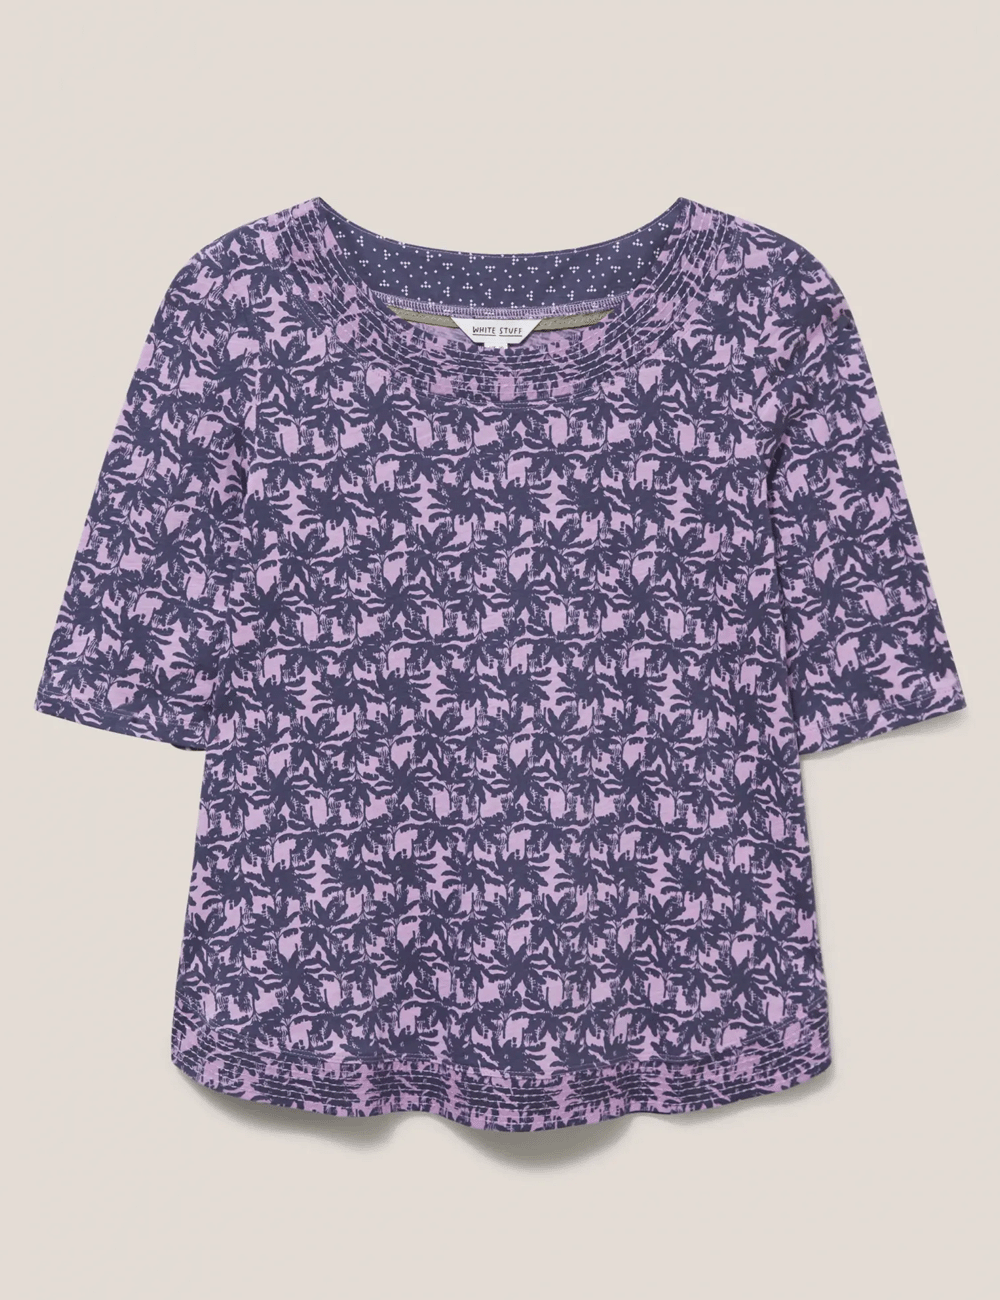 White Stuff's Weaver Jersey T-Shirt in Purple Multi on a grey background